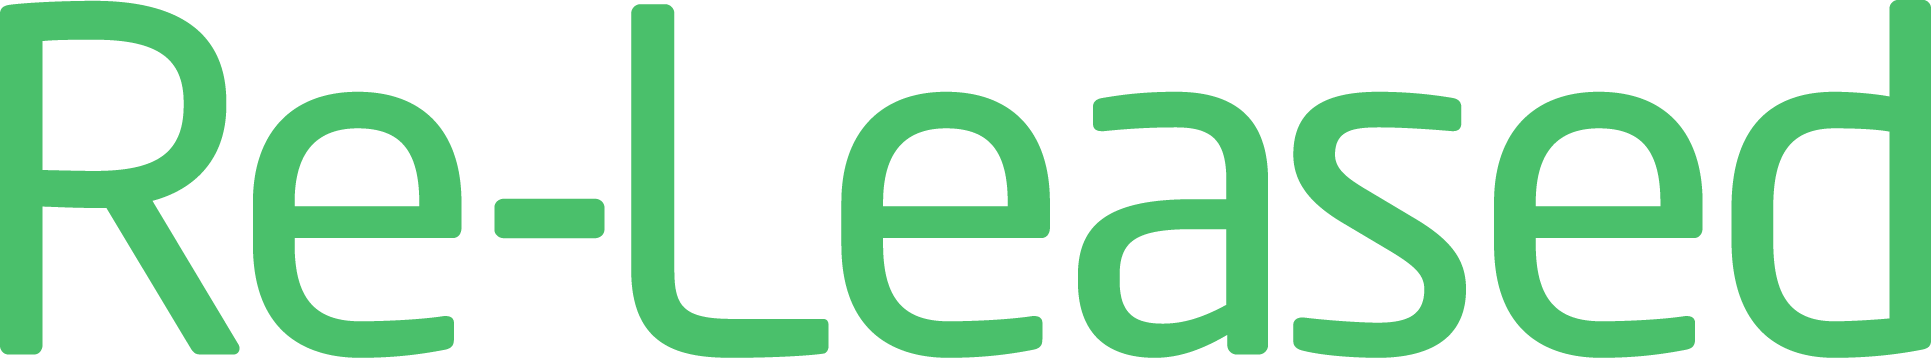 Logo-green-horizontal-RGB.EPS